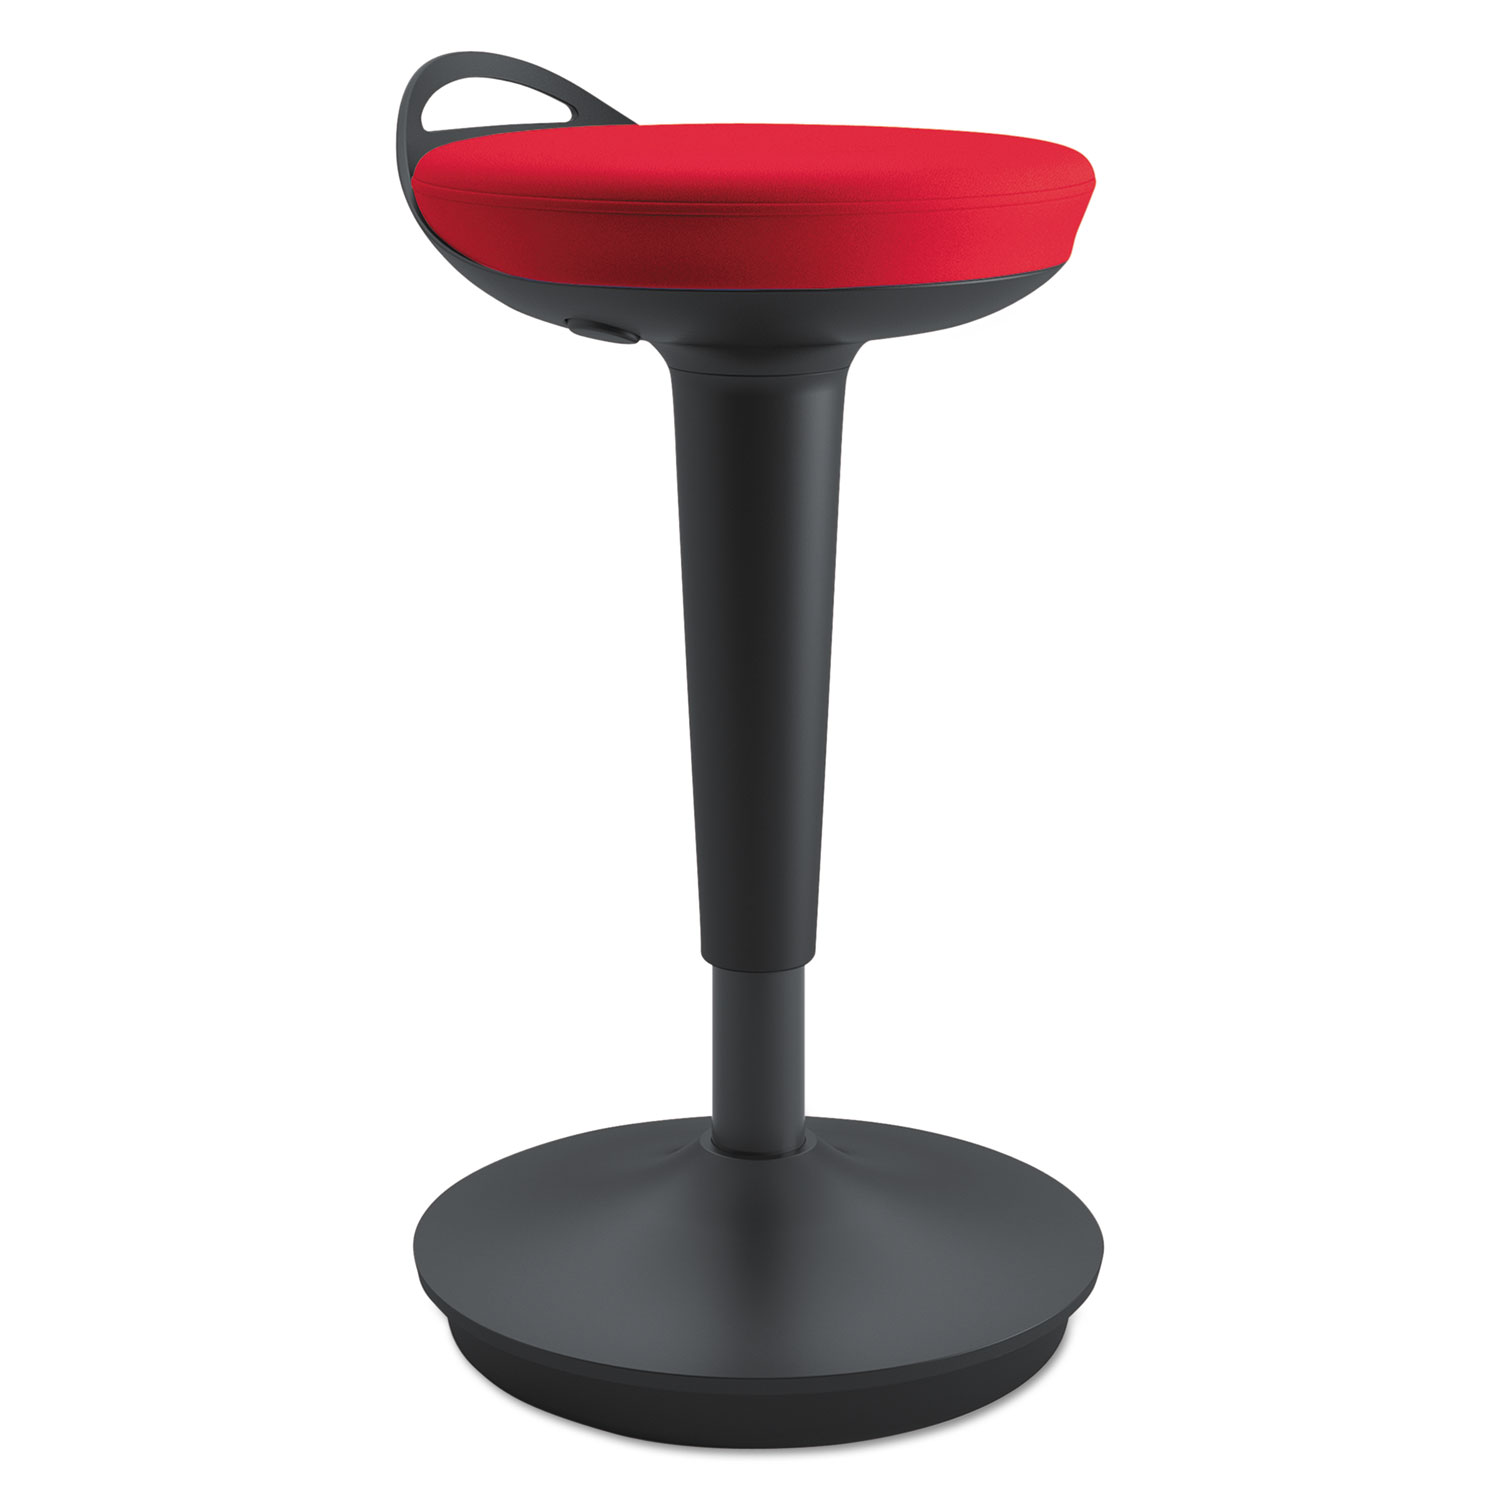  Alera ALEAE33PSRD AdaptivErgo Balance Perch Stool, Red Seat/Red Back, Black Base (ALEAE33PSRD) 